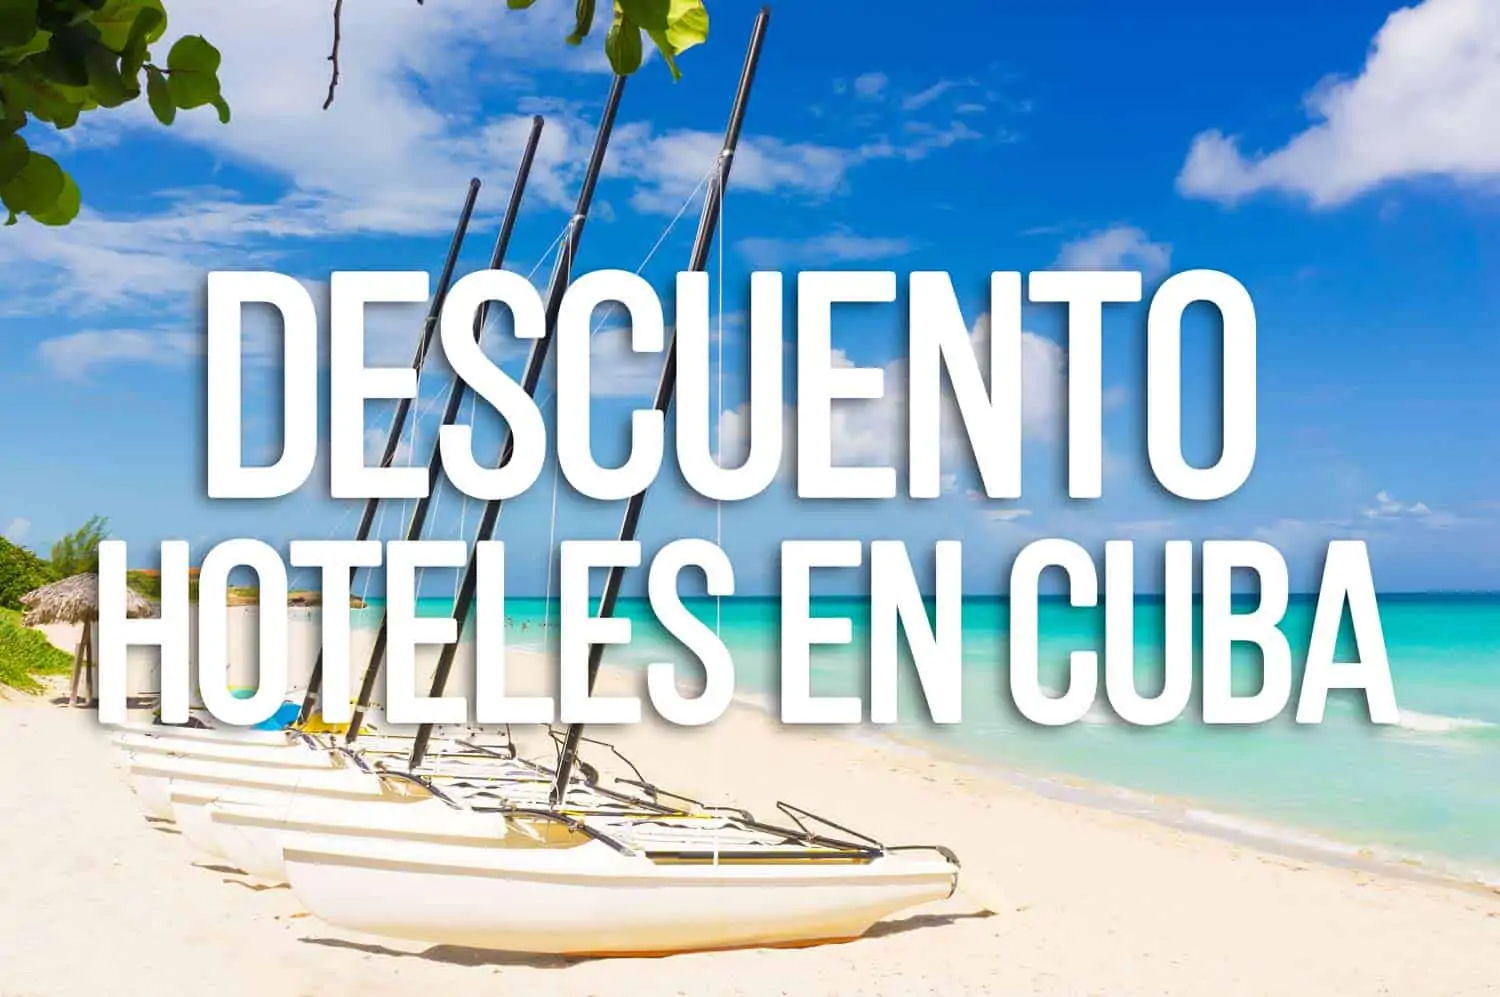 descuento en hoteles cubanos